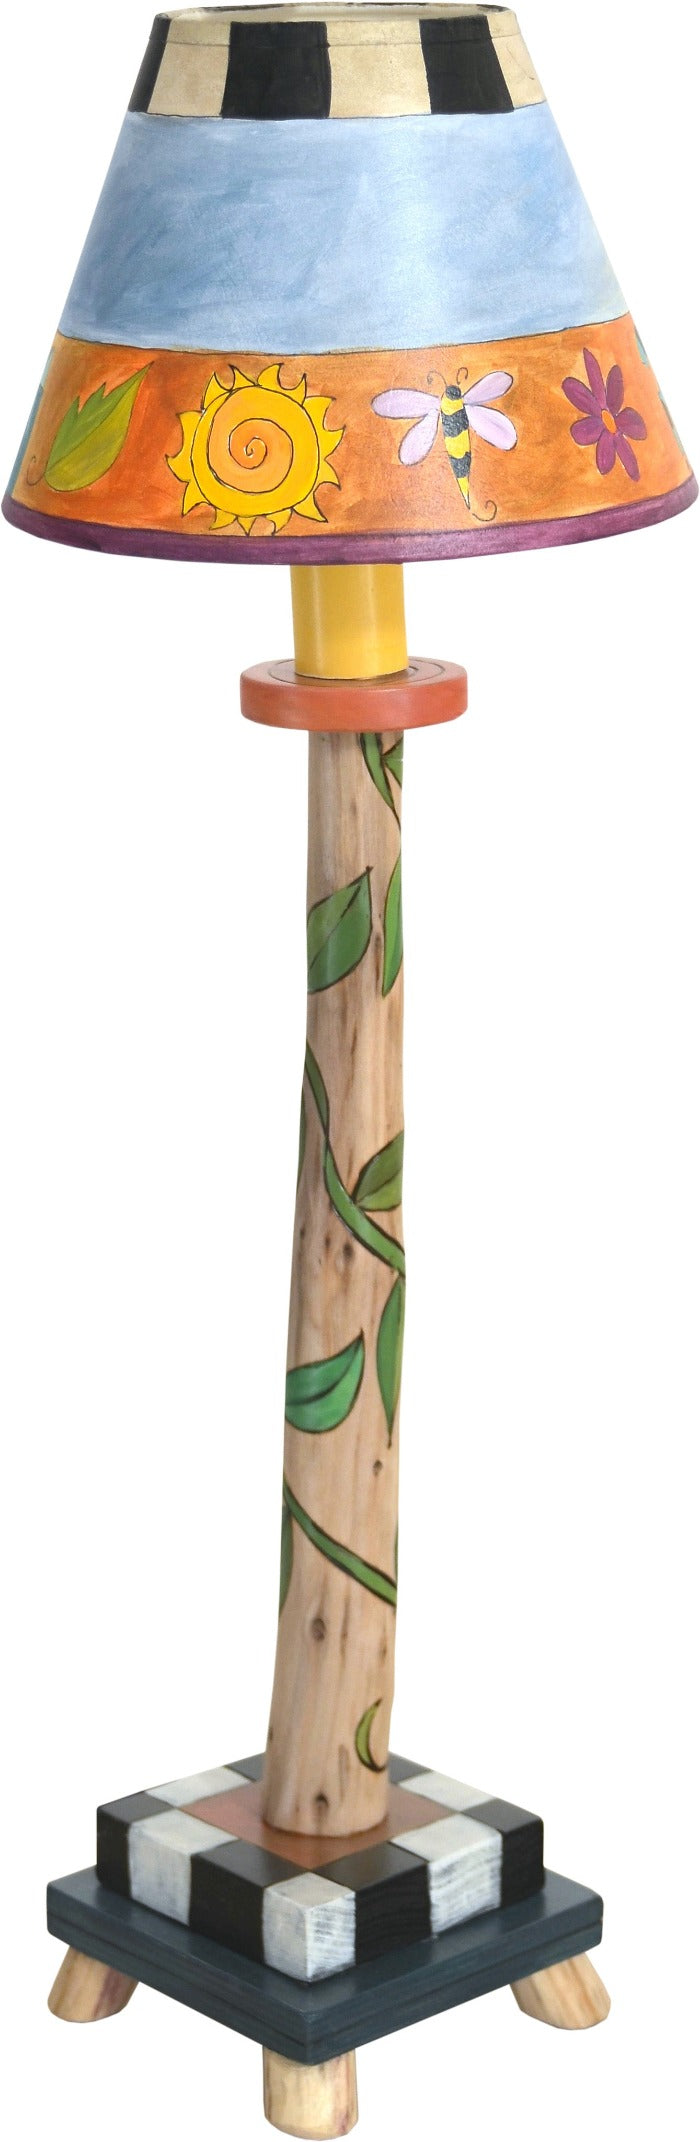 Log Candlestick Lamp